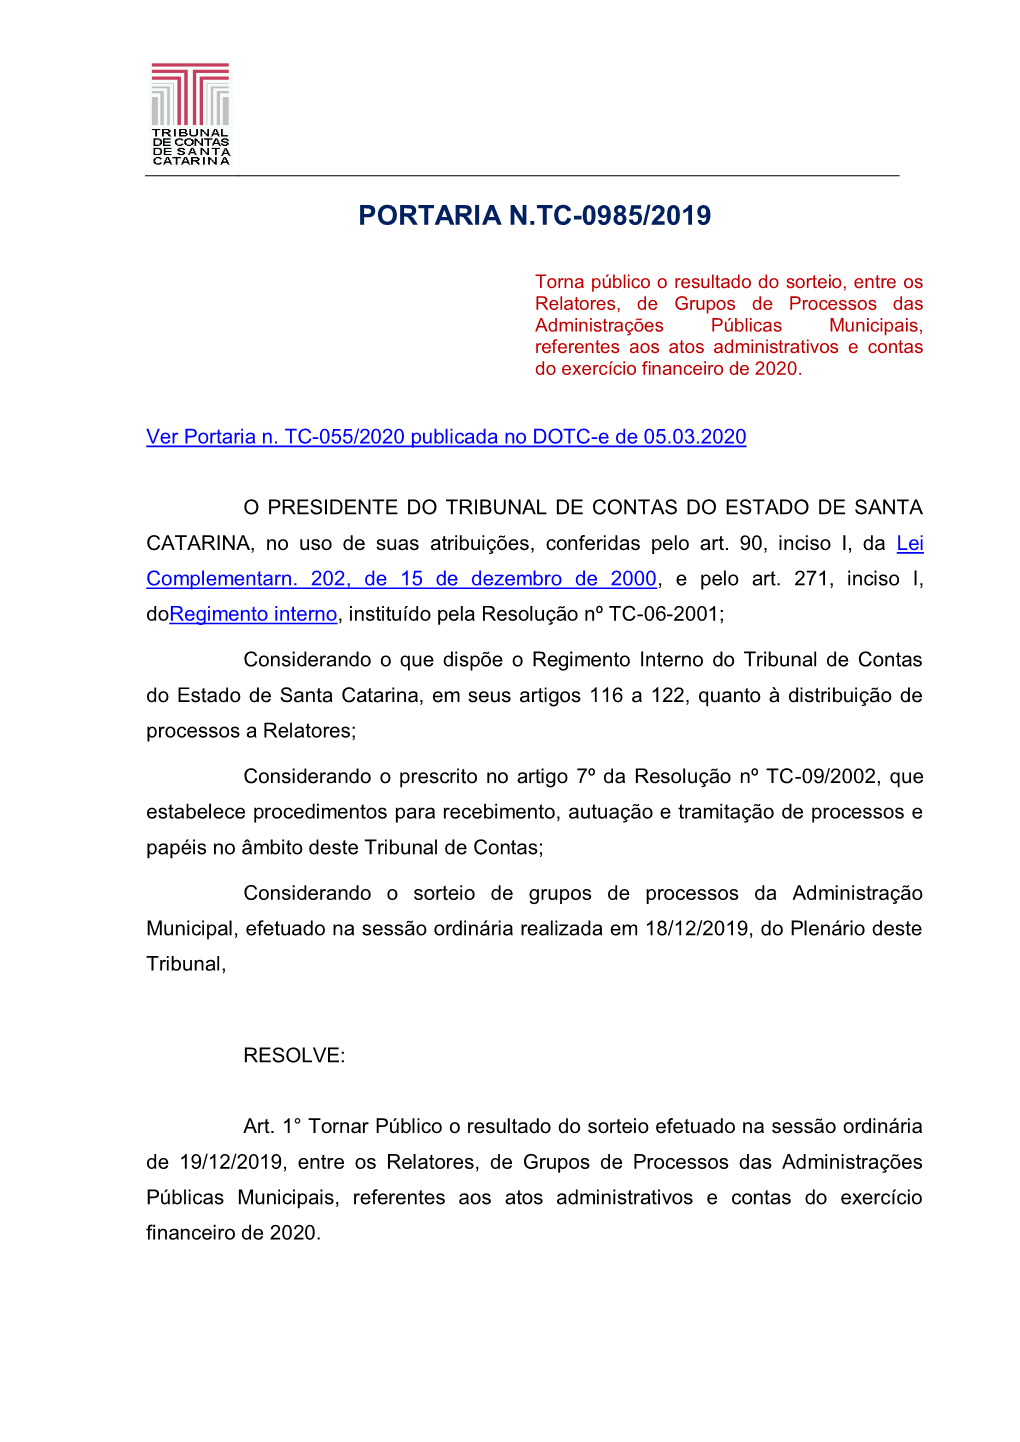 PORTARIA N.TC 0985-2019 CONSOLIDADA.Pdf